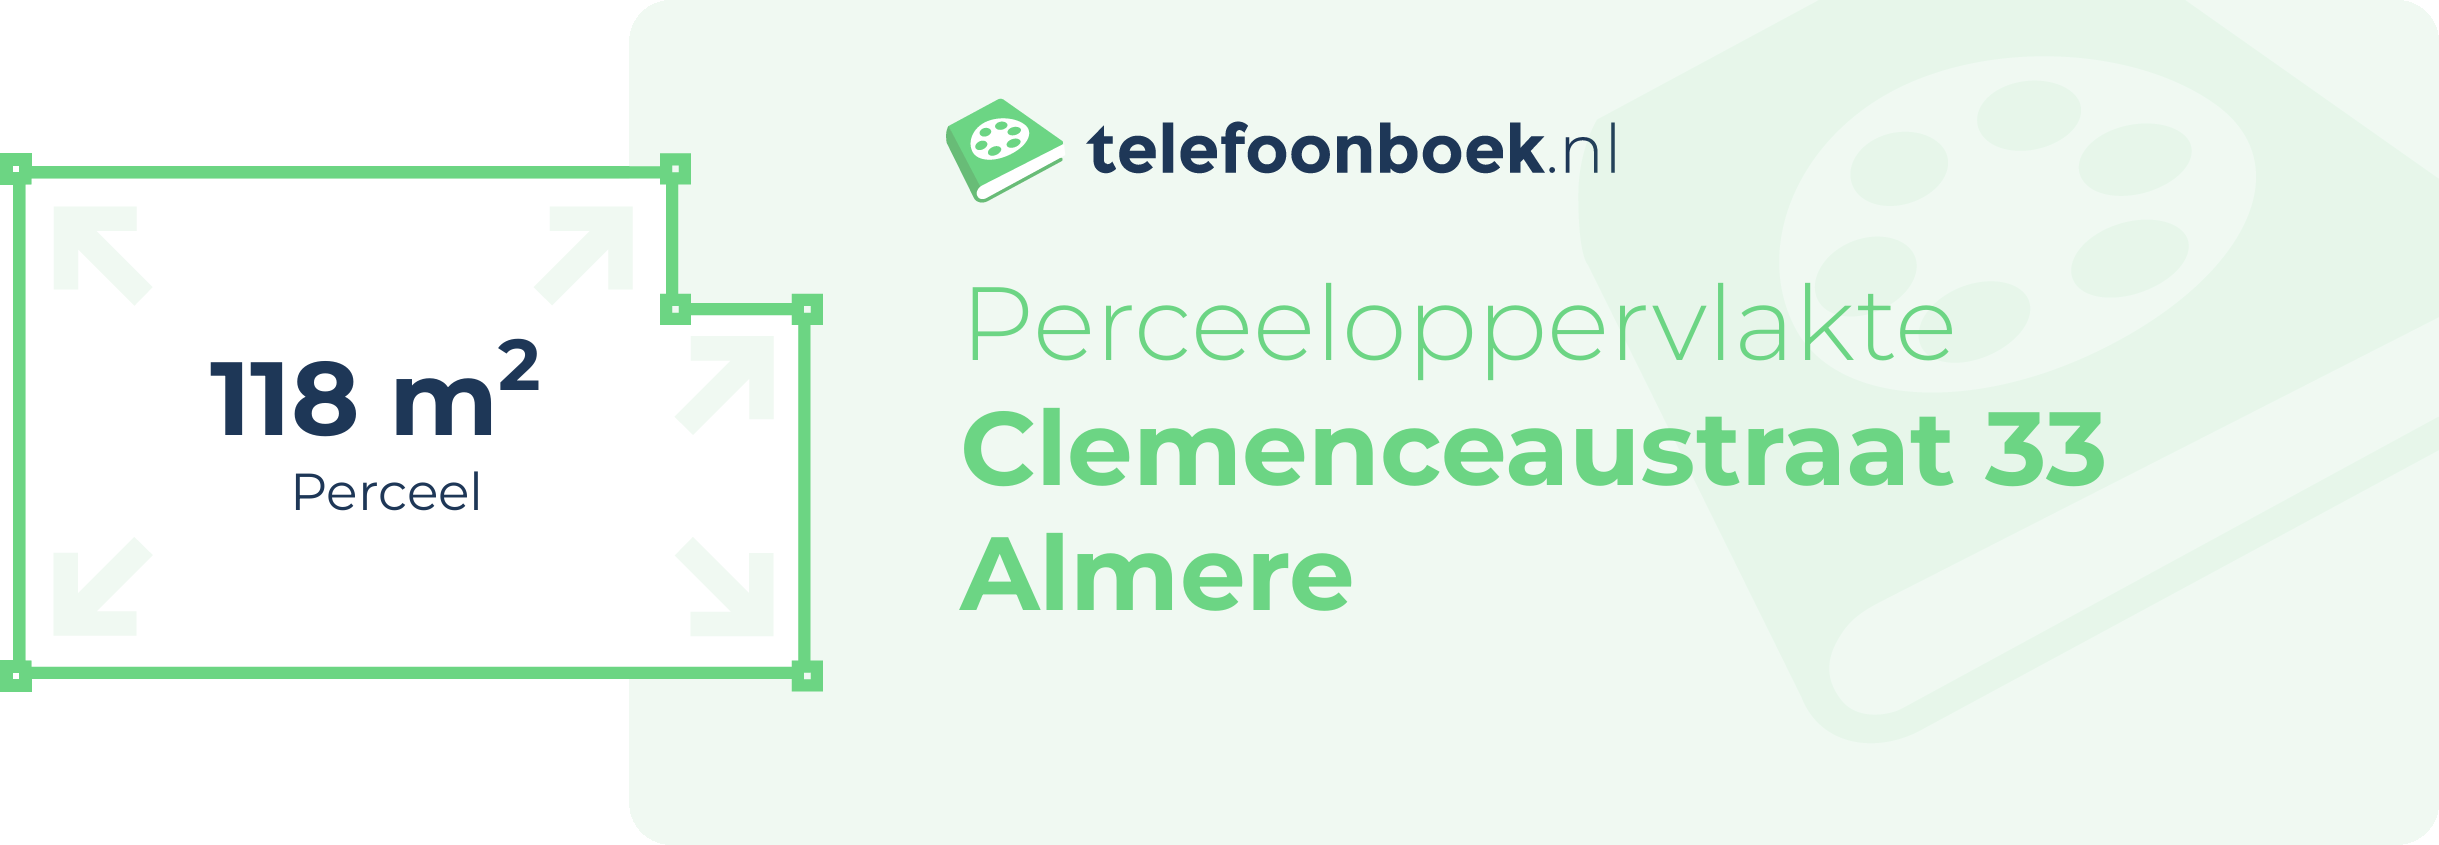 Perceeloppervlakte Clemenceaustraat 33 Almere